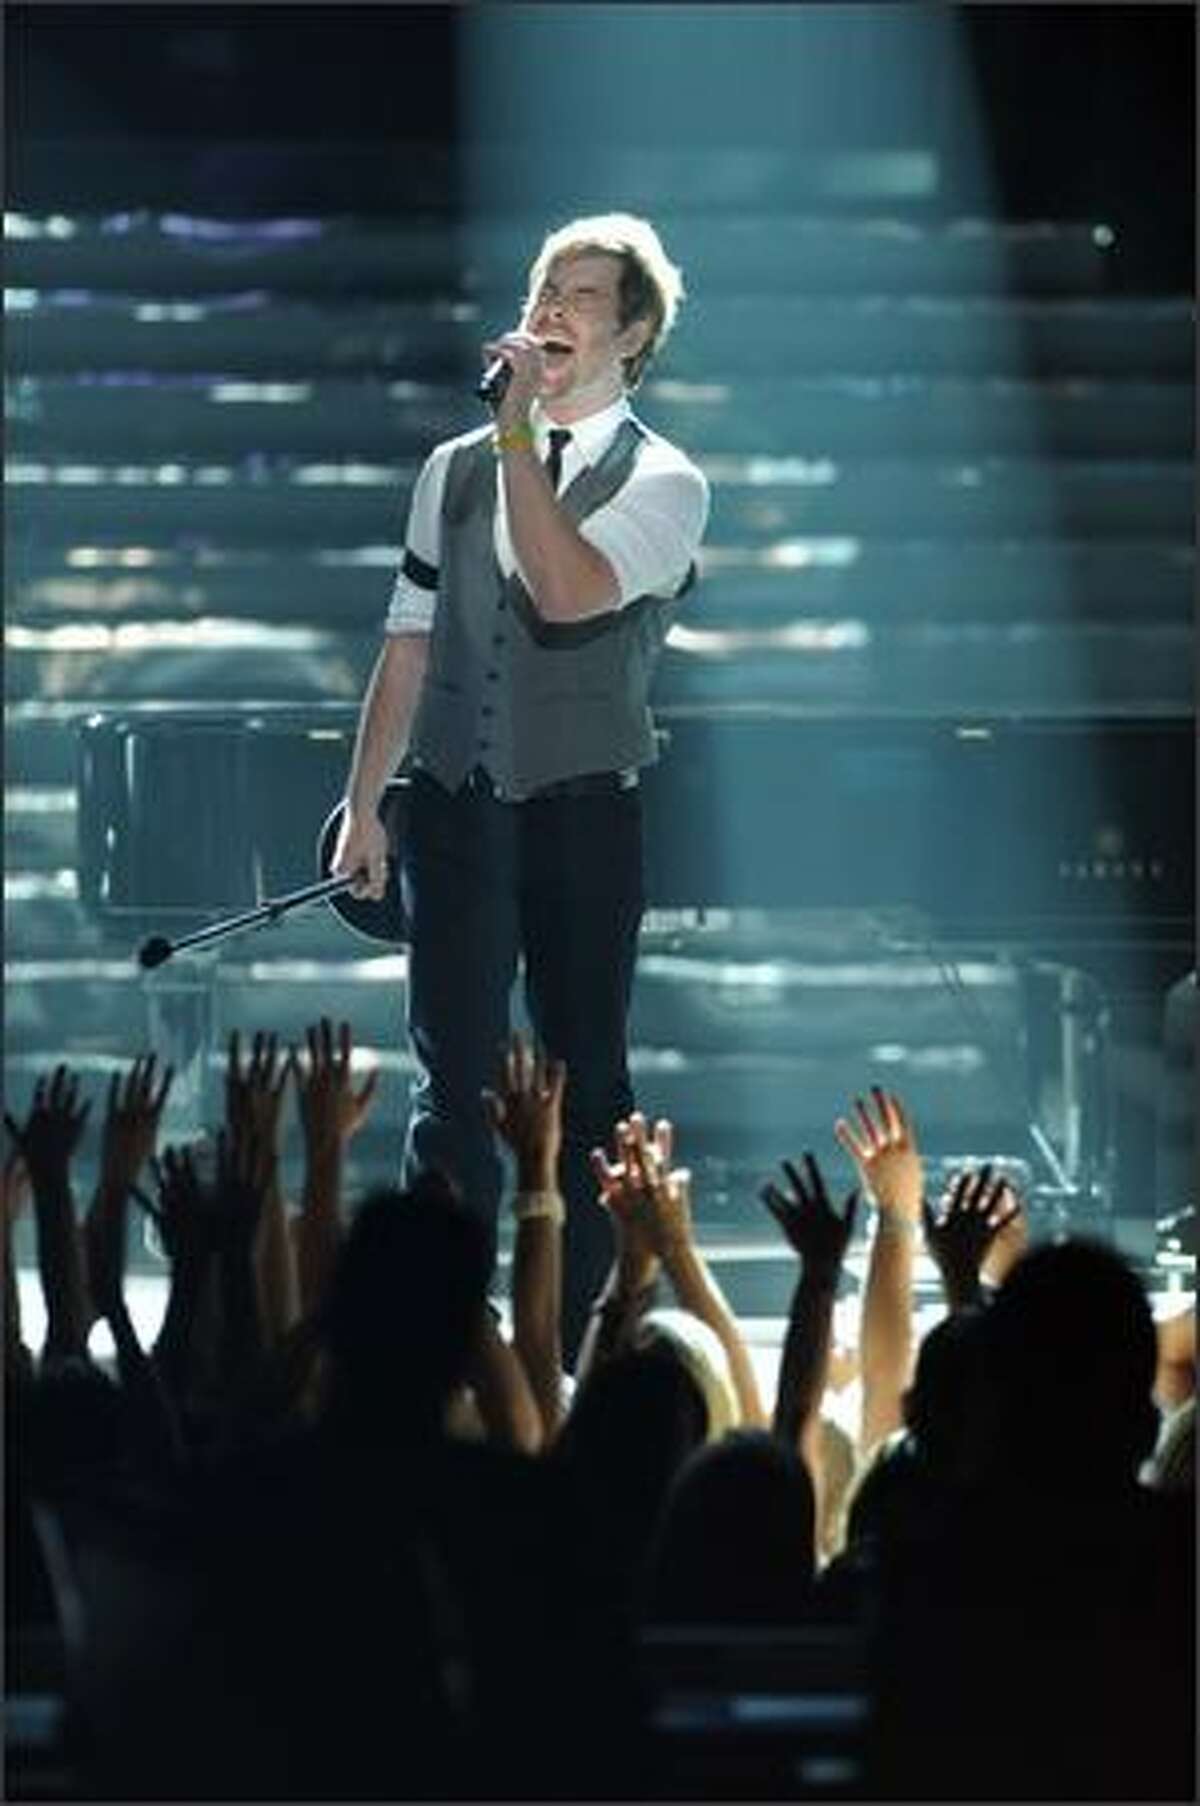 Season 7 American Idol winner David Cook performs "Permanent."